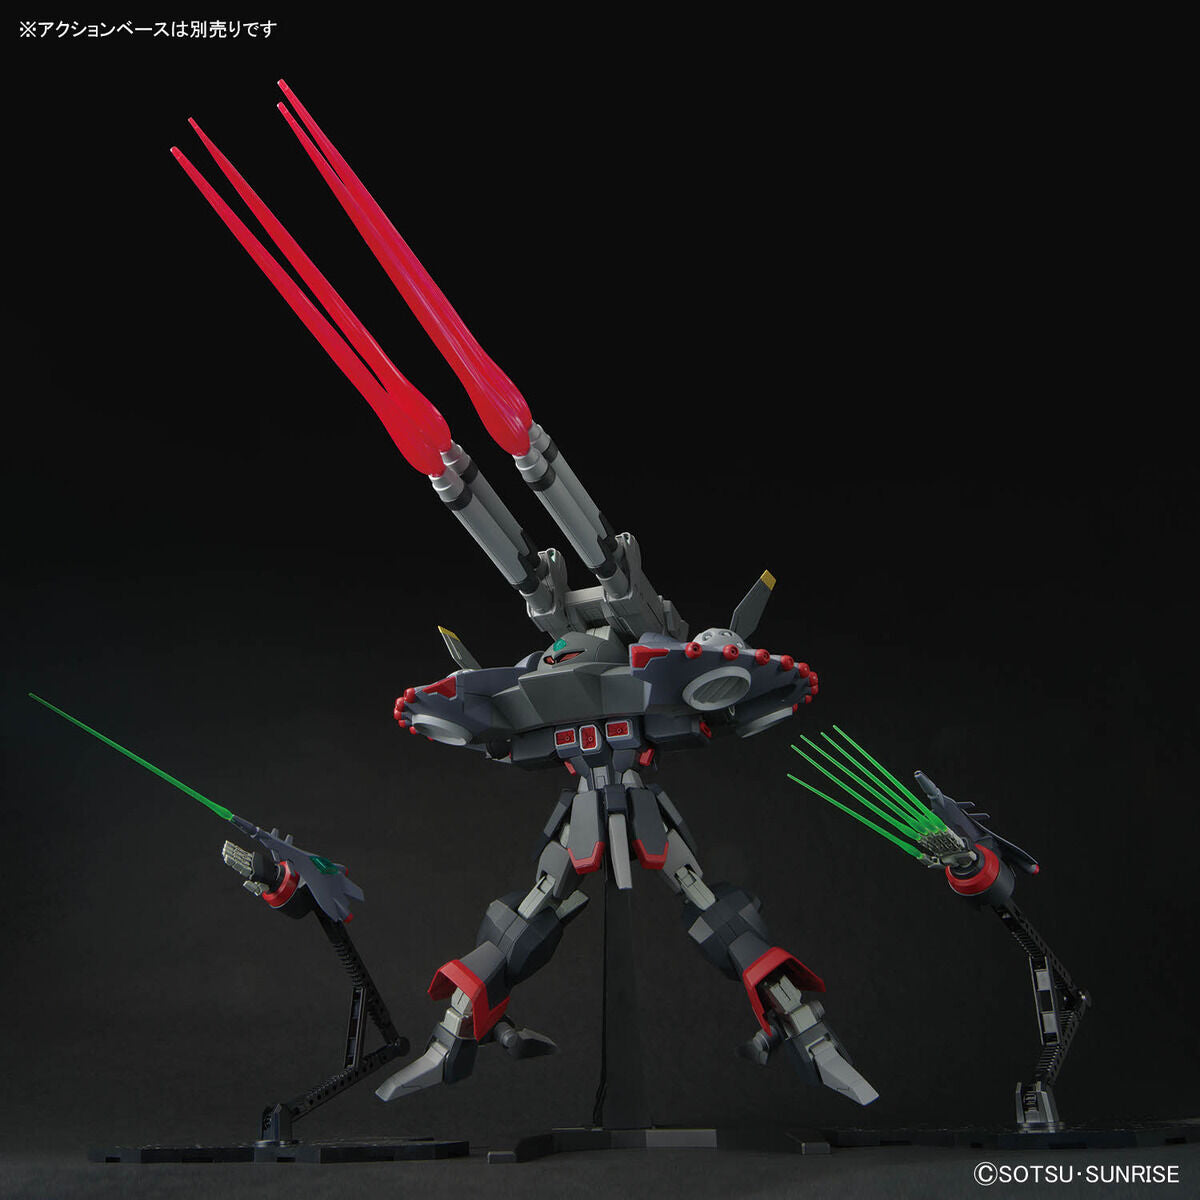 Bandai 1/144 HGCE 246 Destroy Gundam Plastic Model Kit